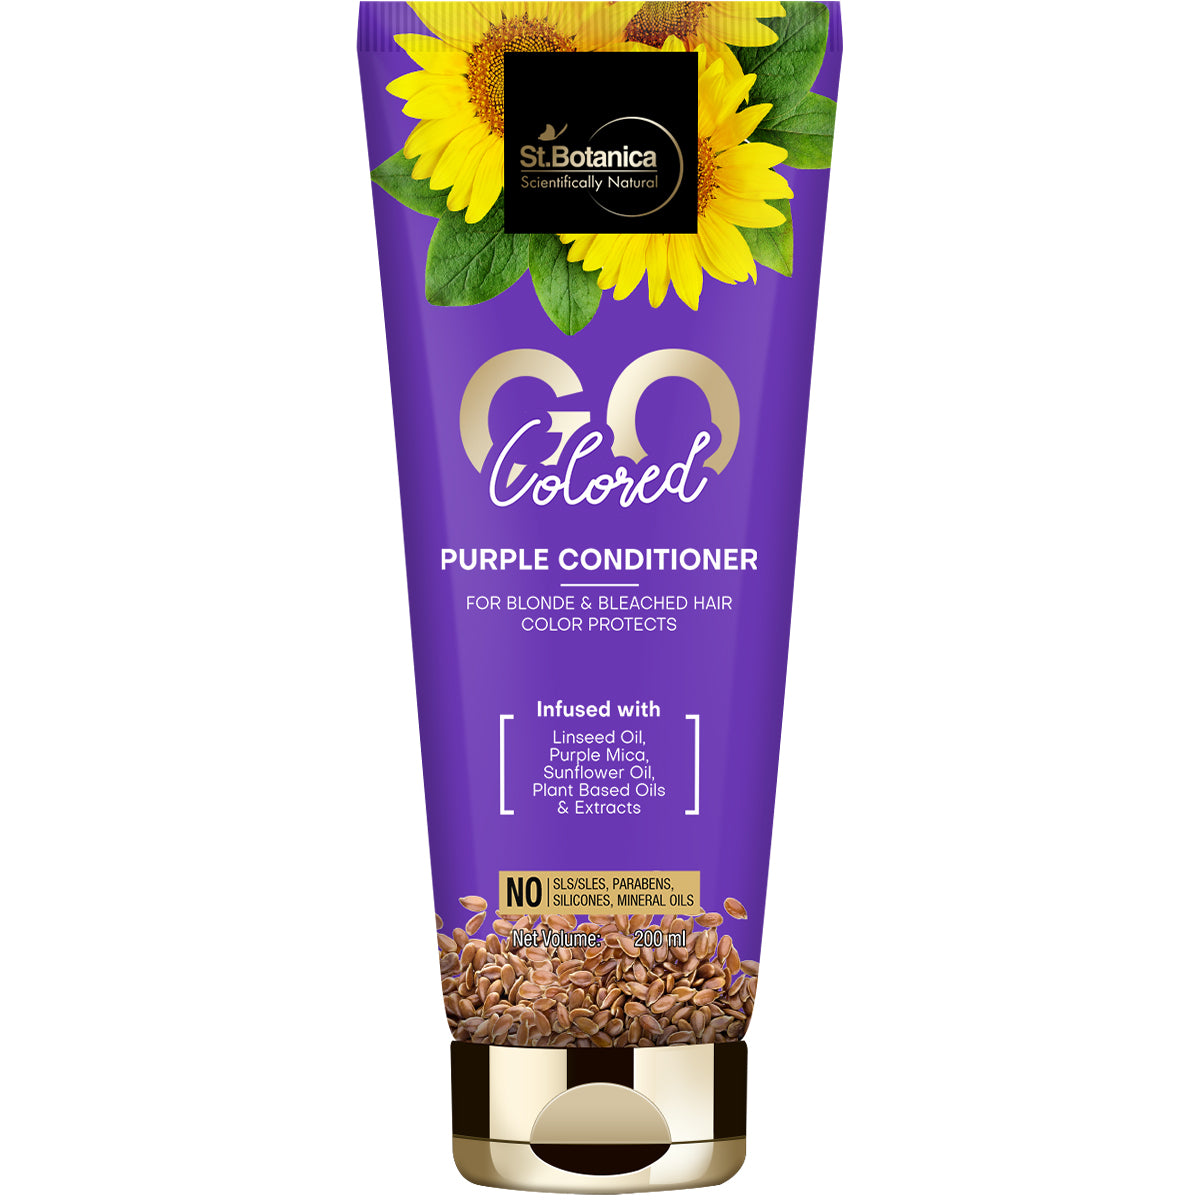 St.Botanica Go Colored Purple Shampoo + Conditioner, 200ml Each, No SLS/Sulphate, Paraben, Silicones, Colors